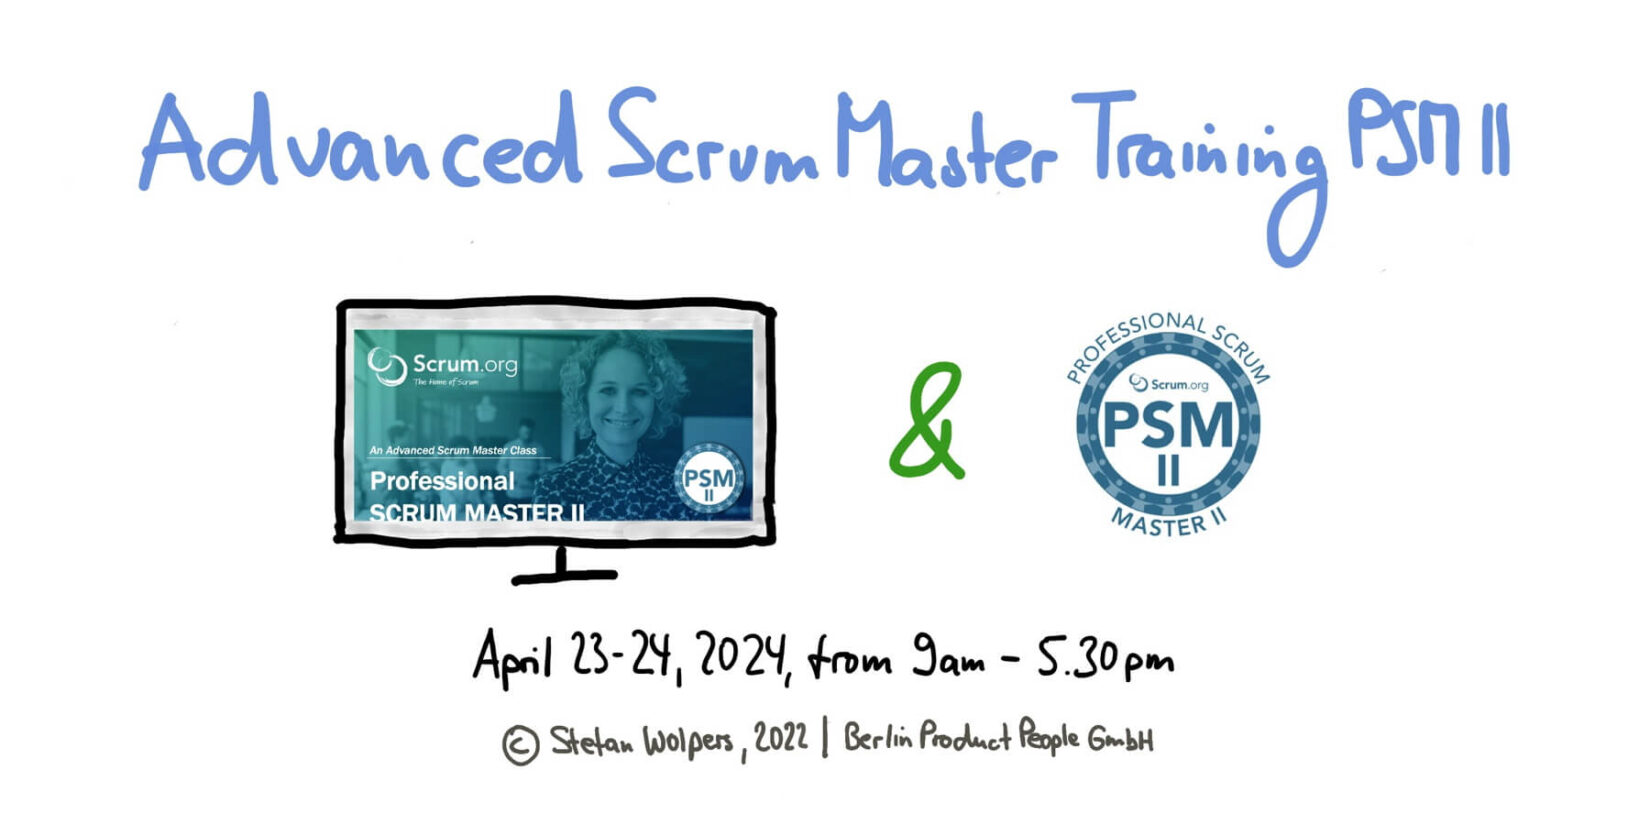 Advanced Professional Scrum Master Training w/ PSM II Certificate — April 23-24, 2024 — Berlin-Product-People.com